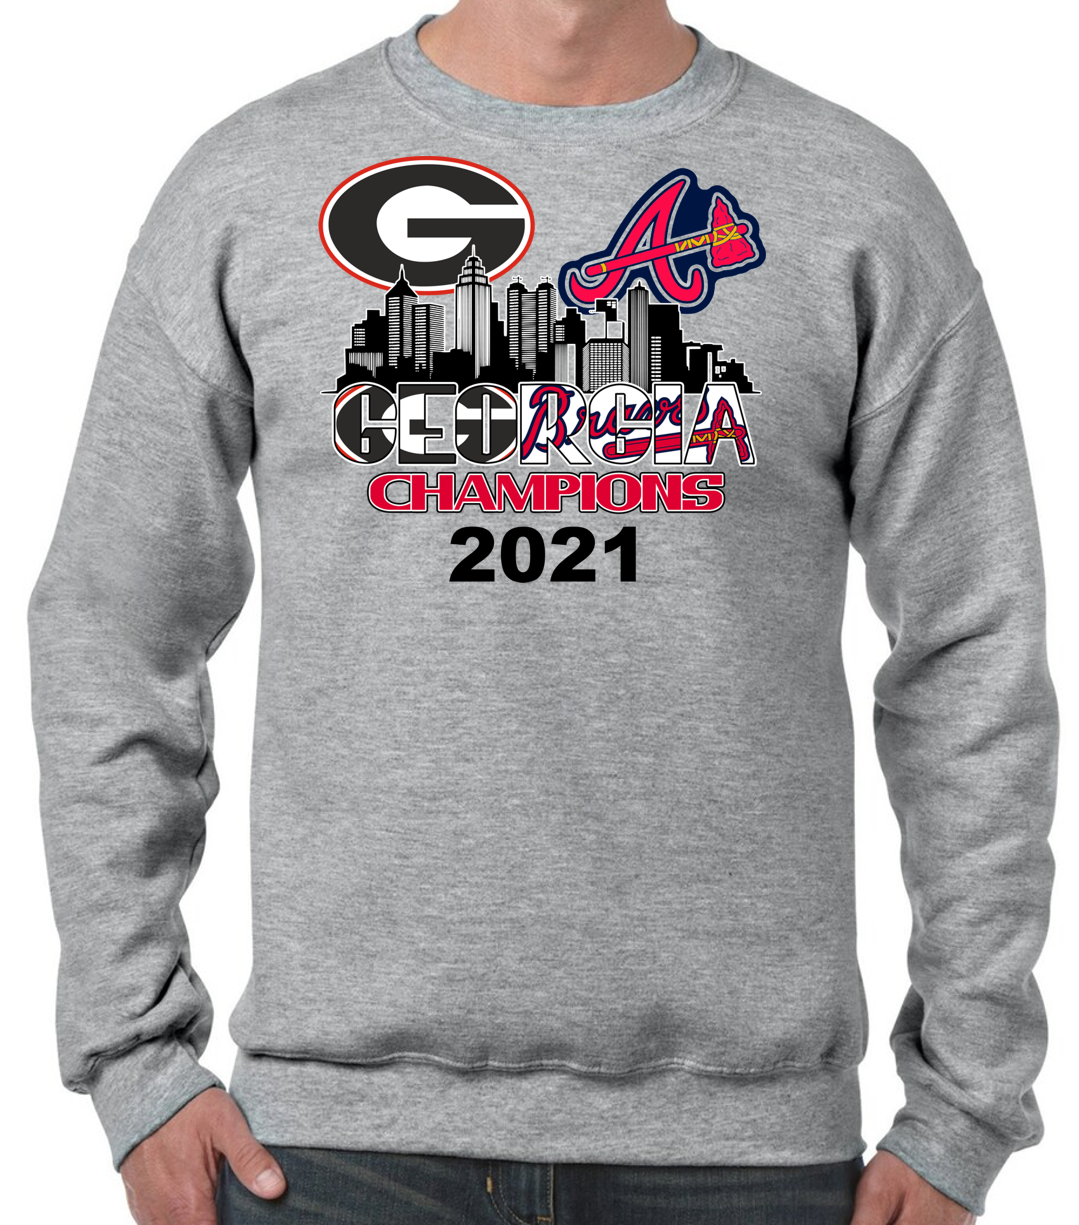 Original 2021 Champions UGA Bulldogs Braves T-Shirt, hoodie